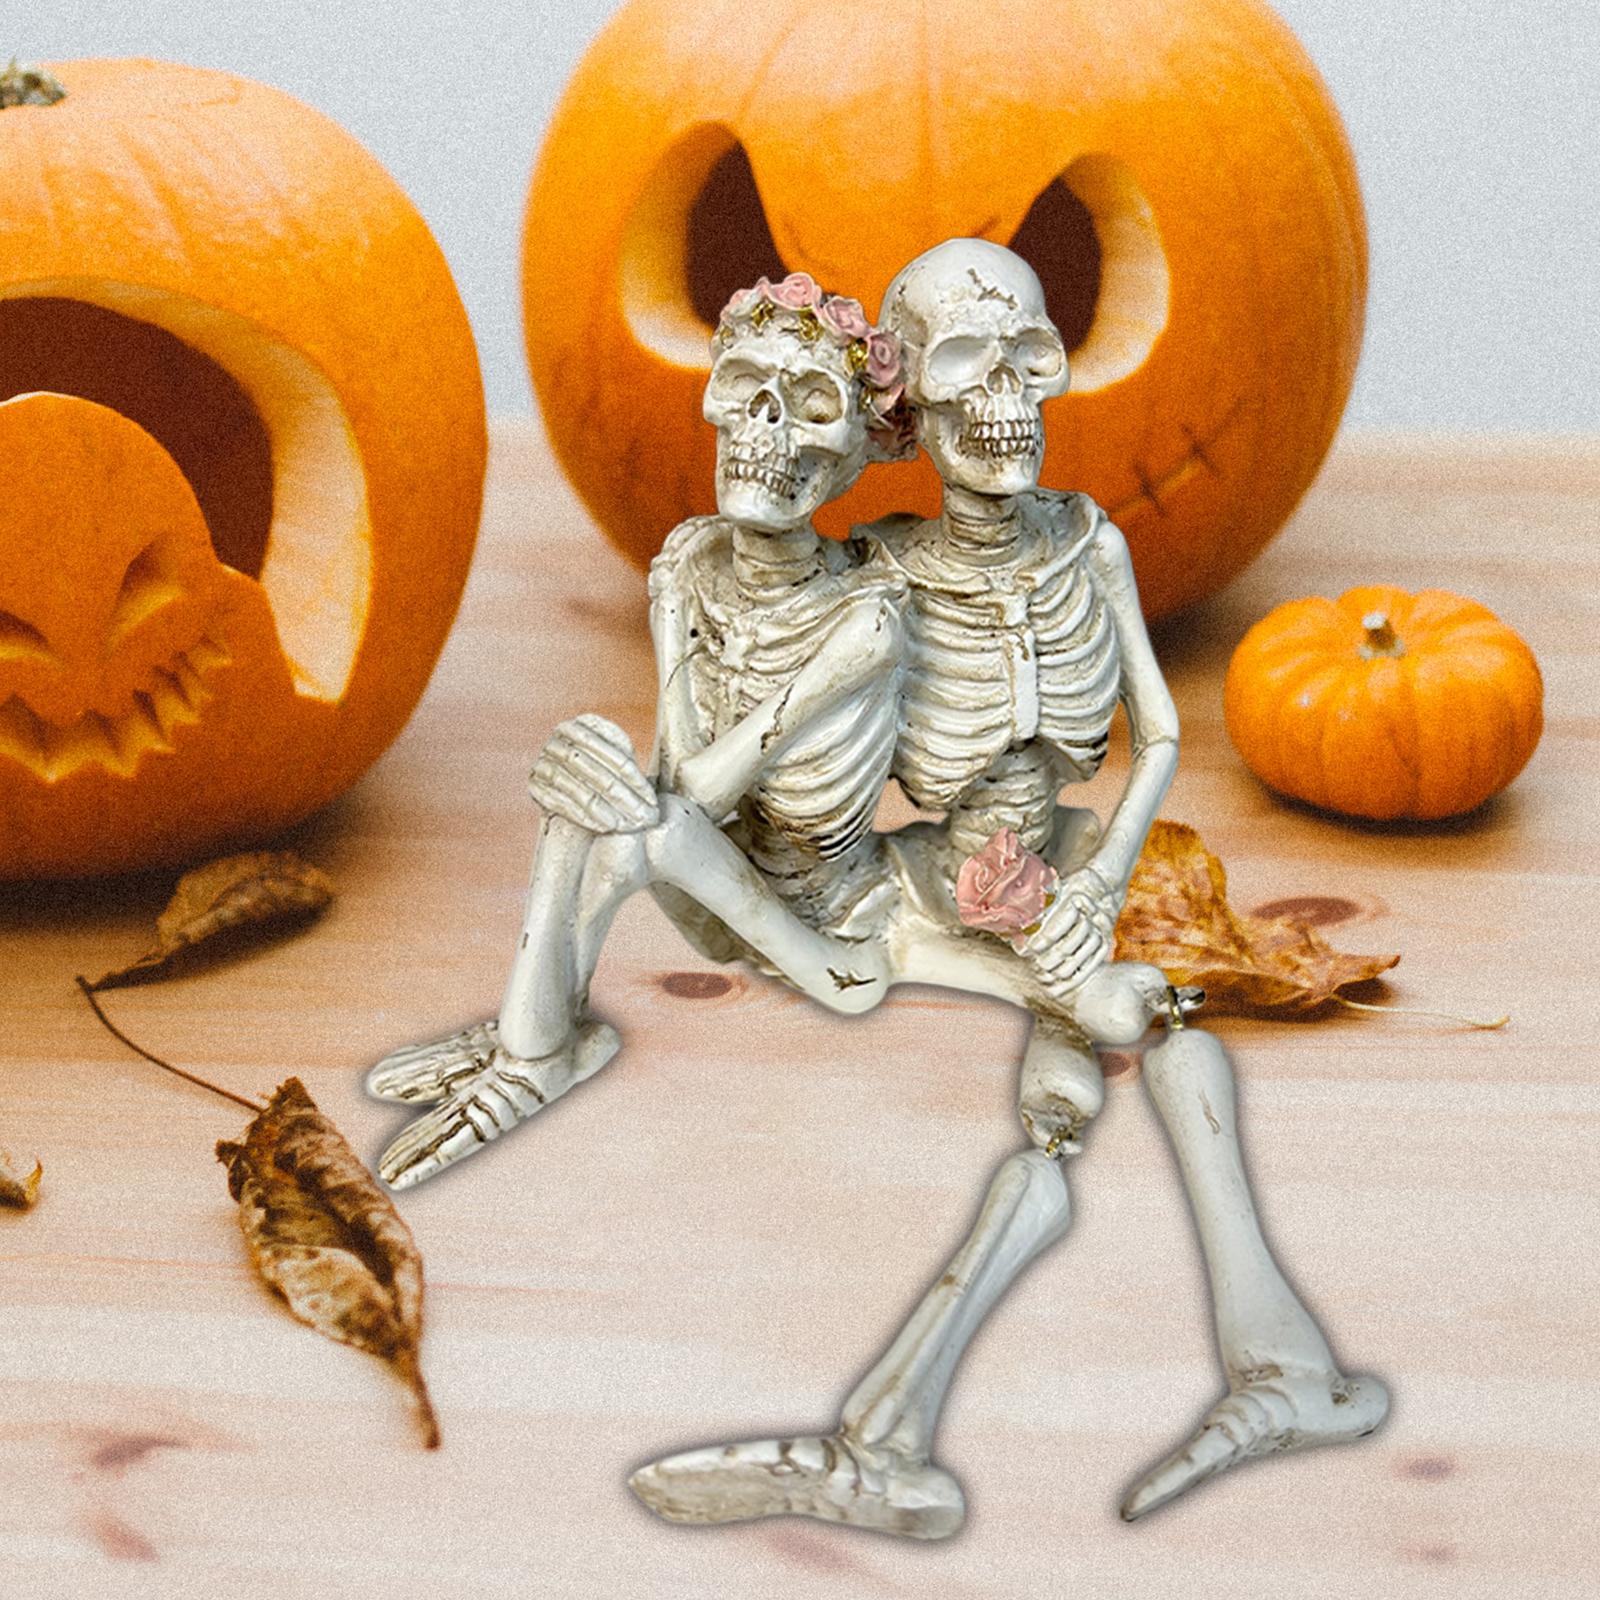 Skeleton Couple Figurine Desk Halloween Decor for Haunted House Cosplay